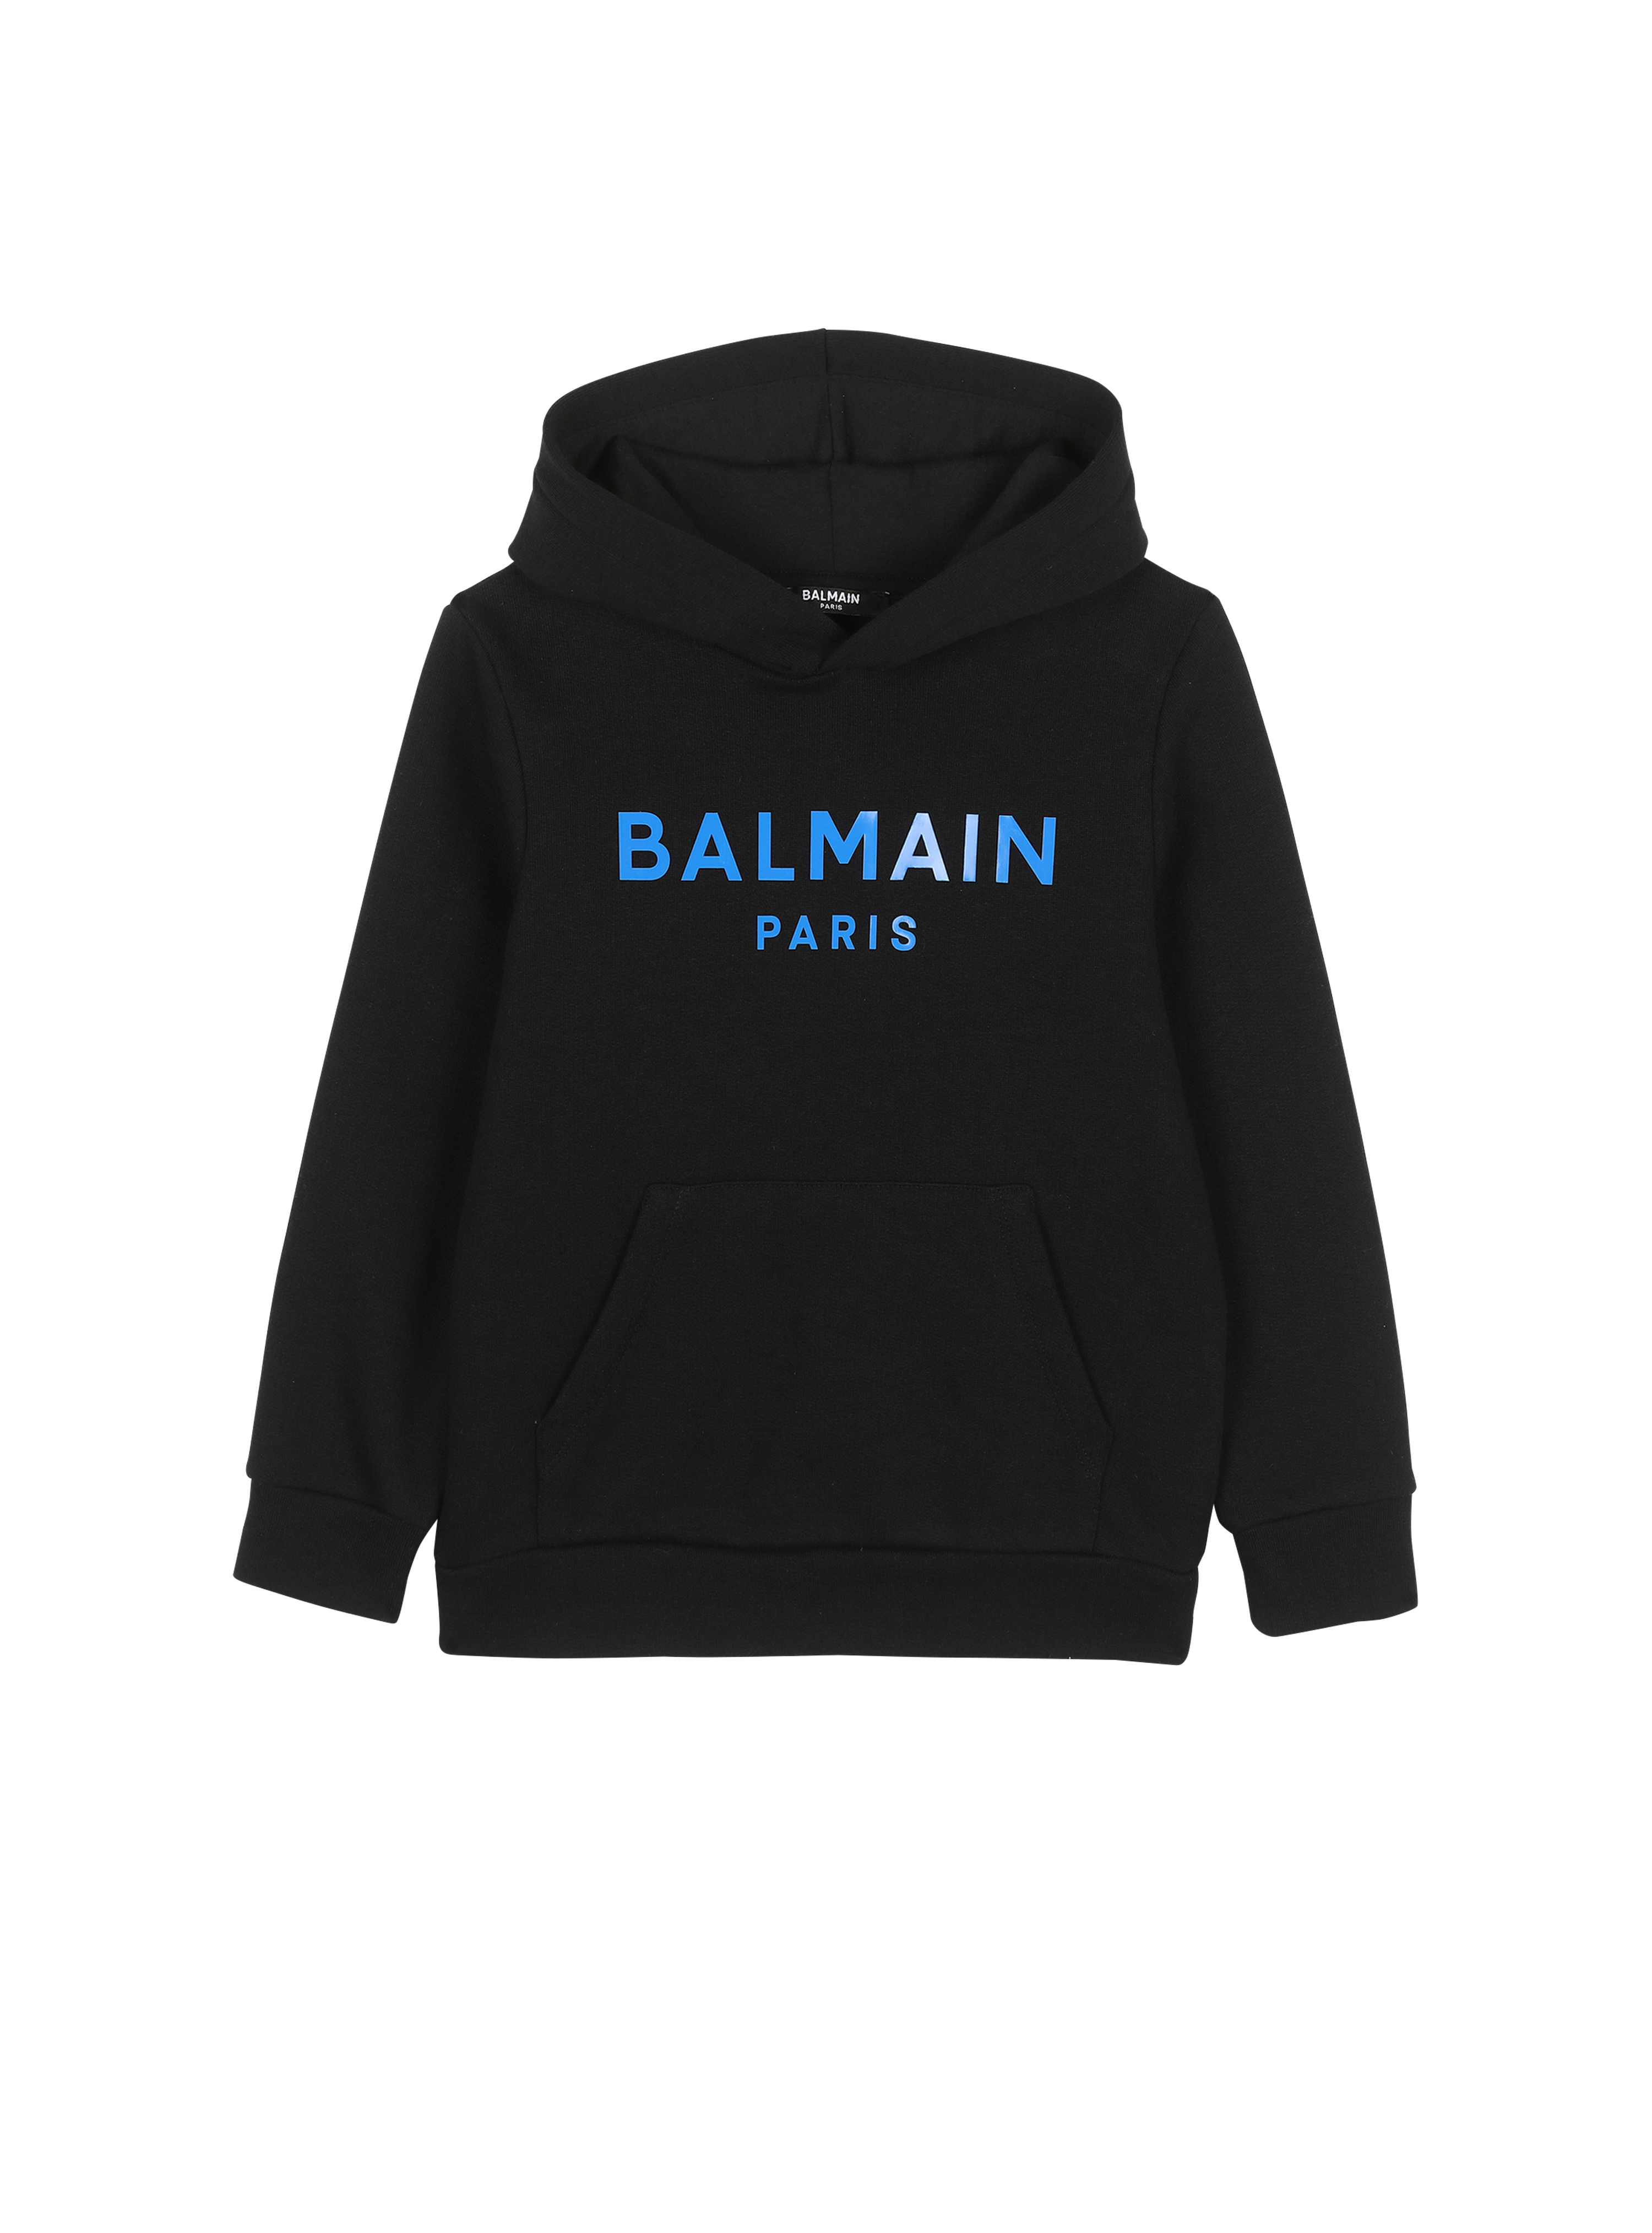 Cotton hoodie with Balmain logo, black